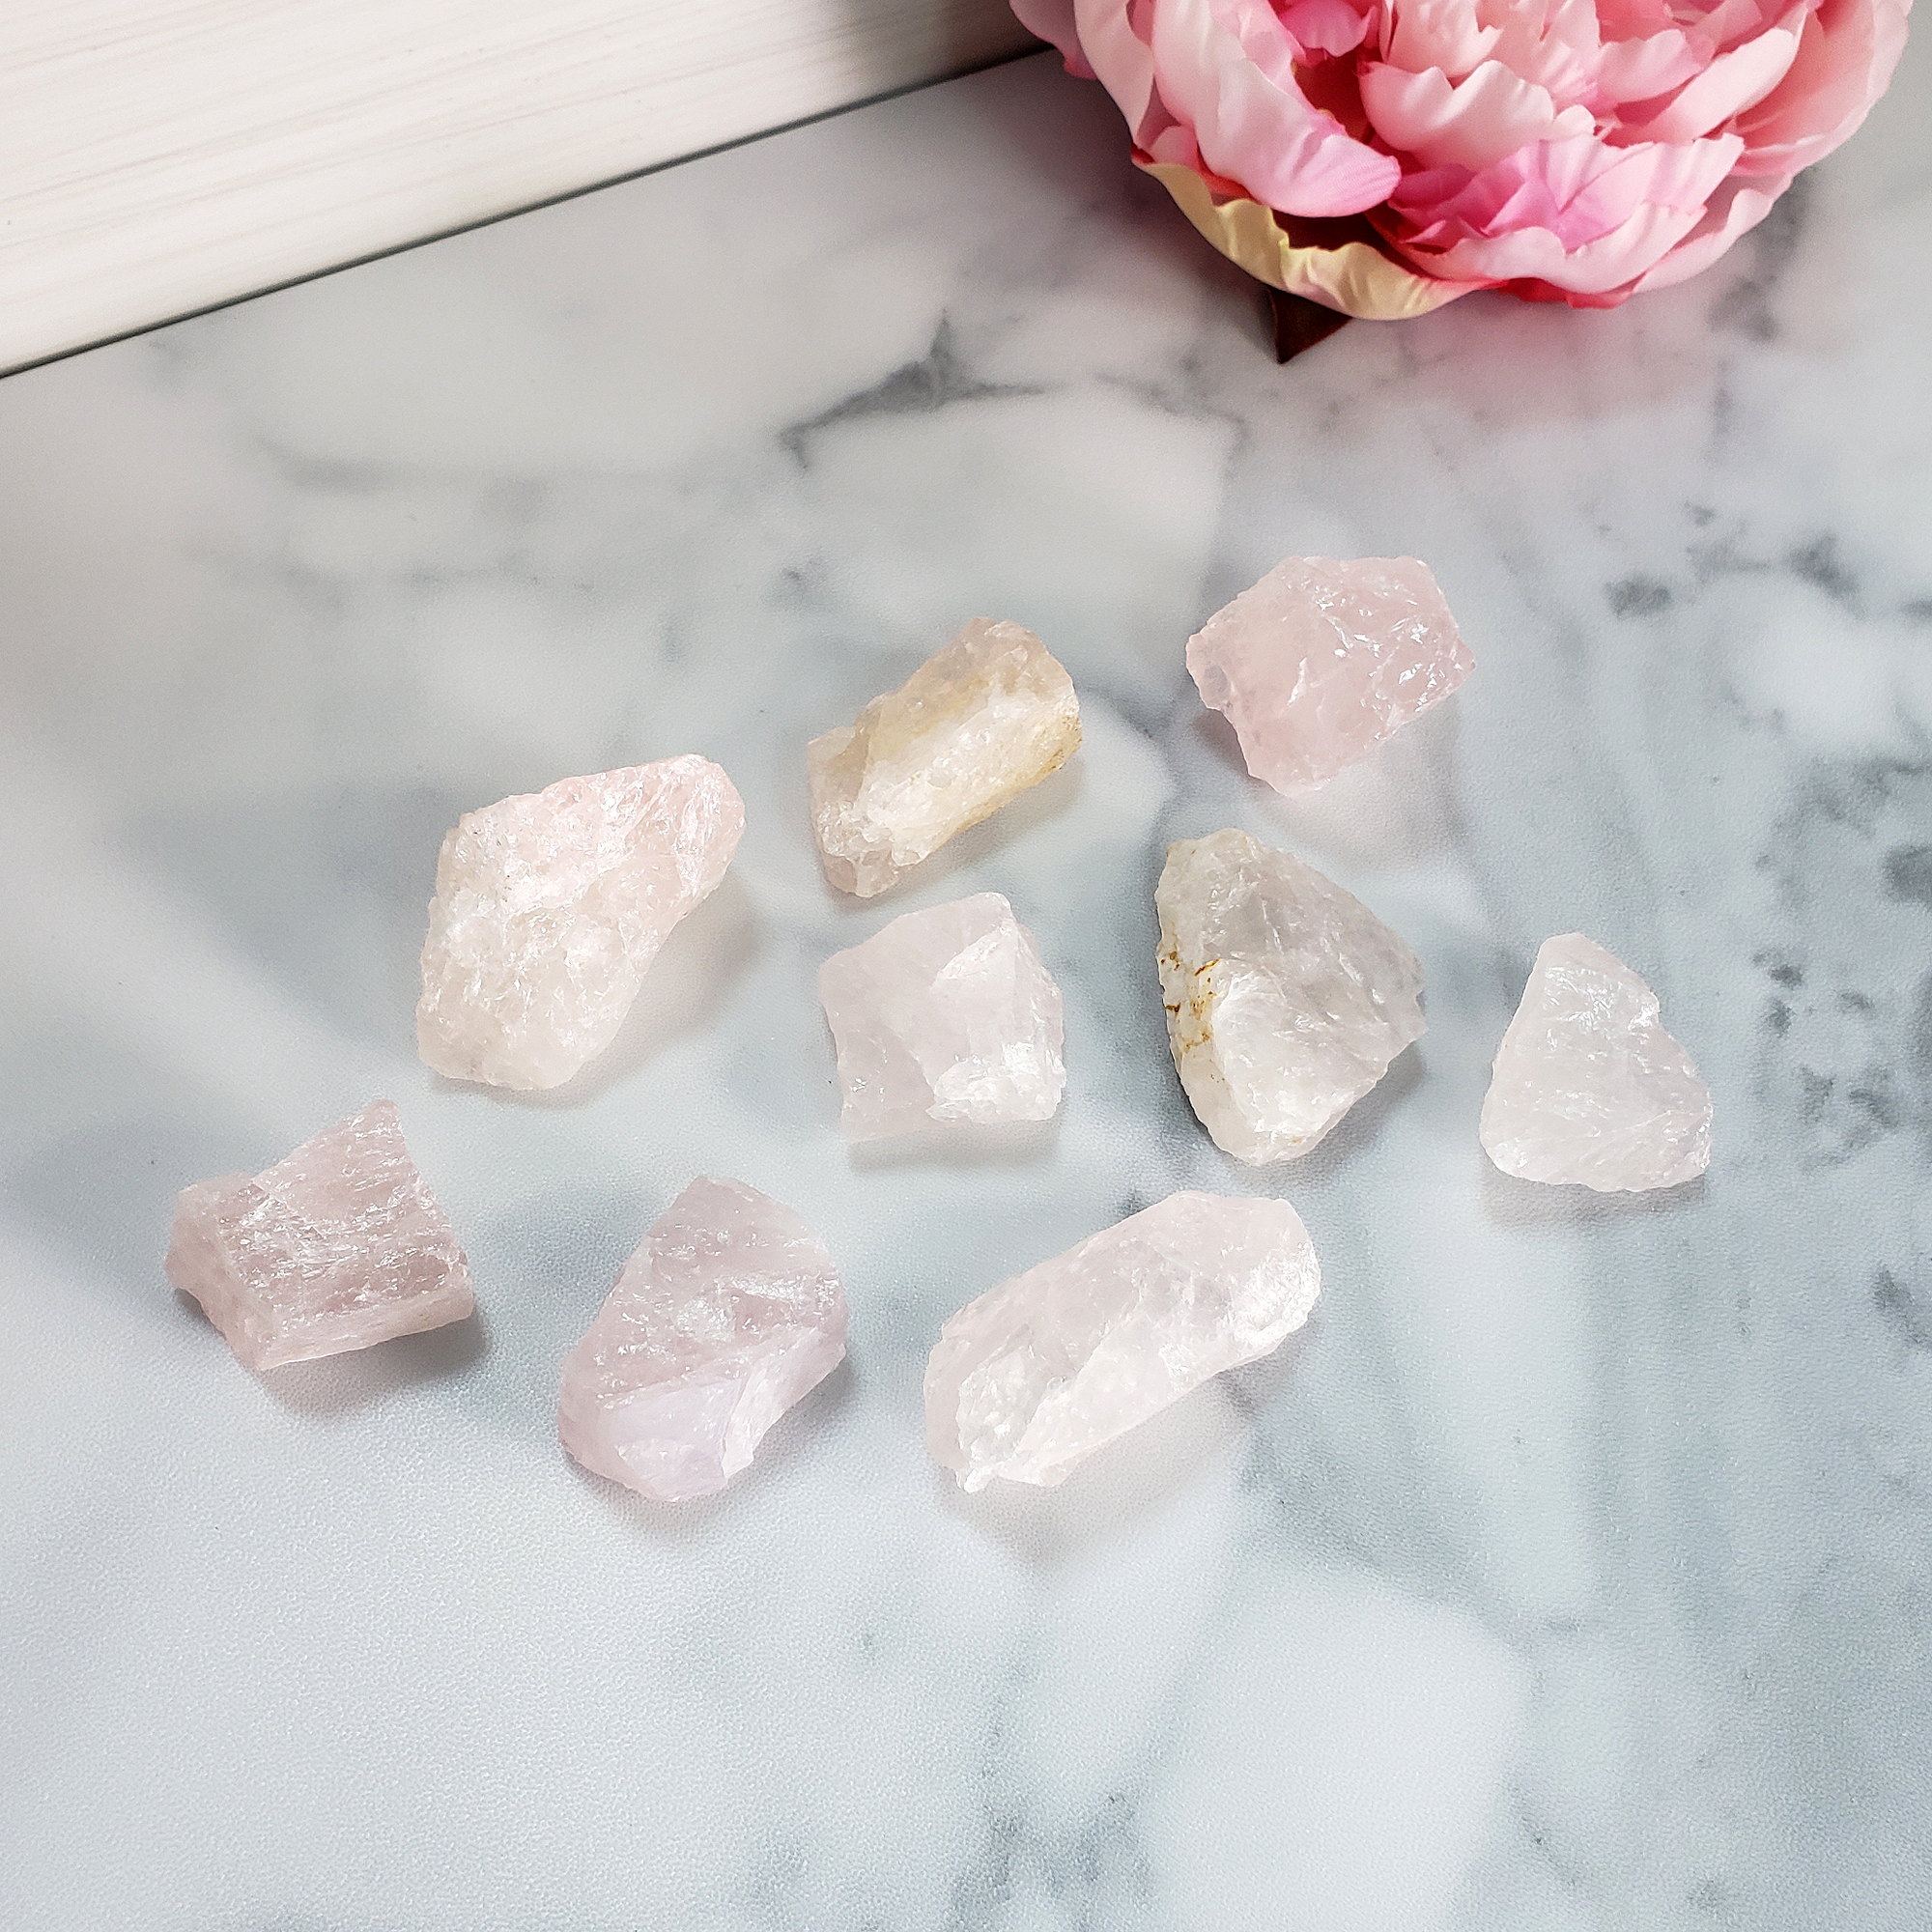 Rose Quartz Raw Crystal Rough Gemstone - Small One Stone - On Tile